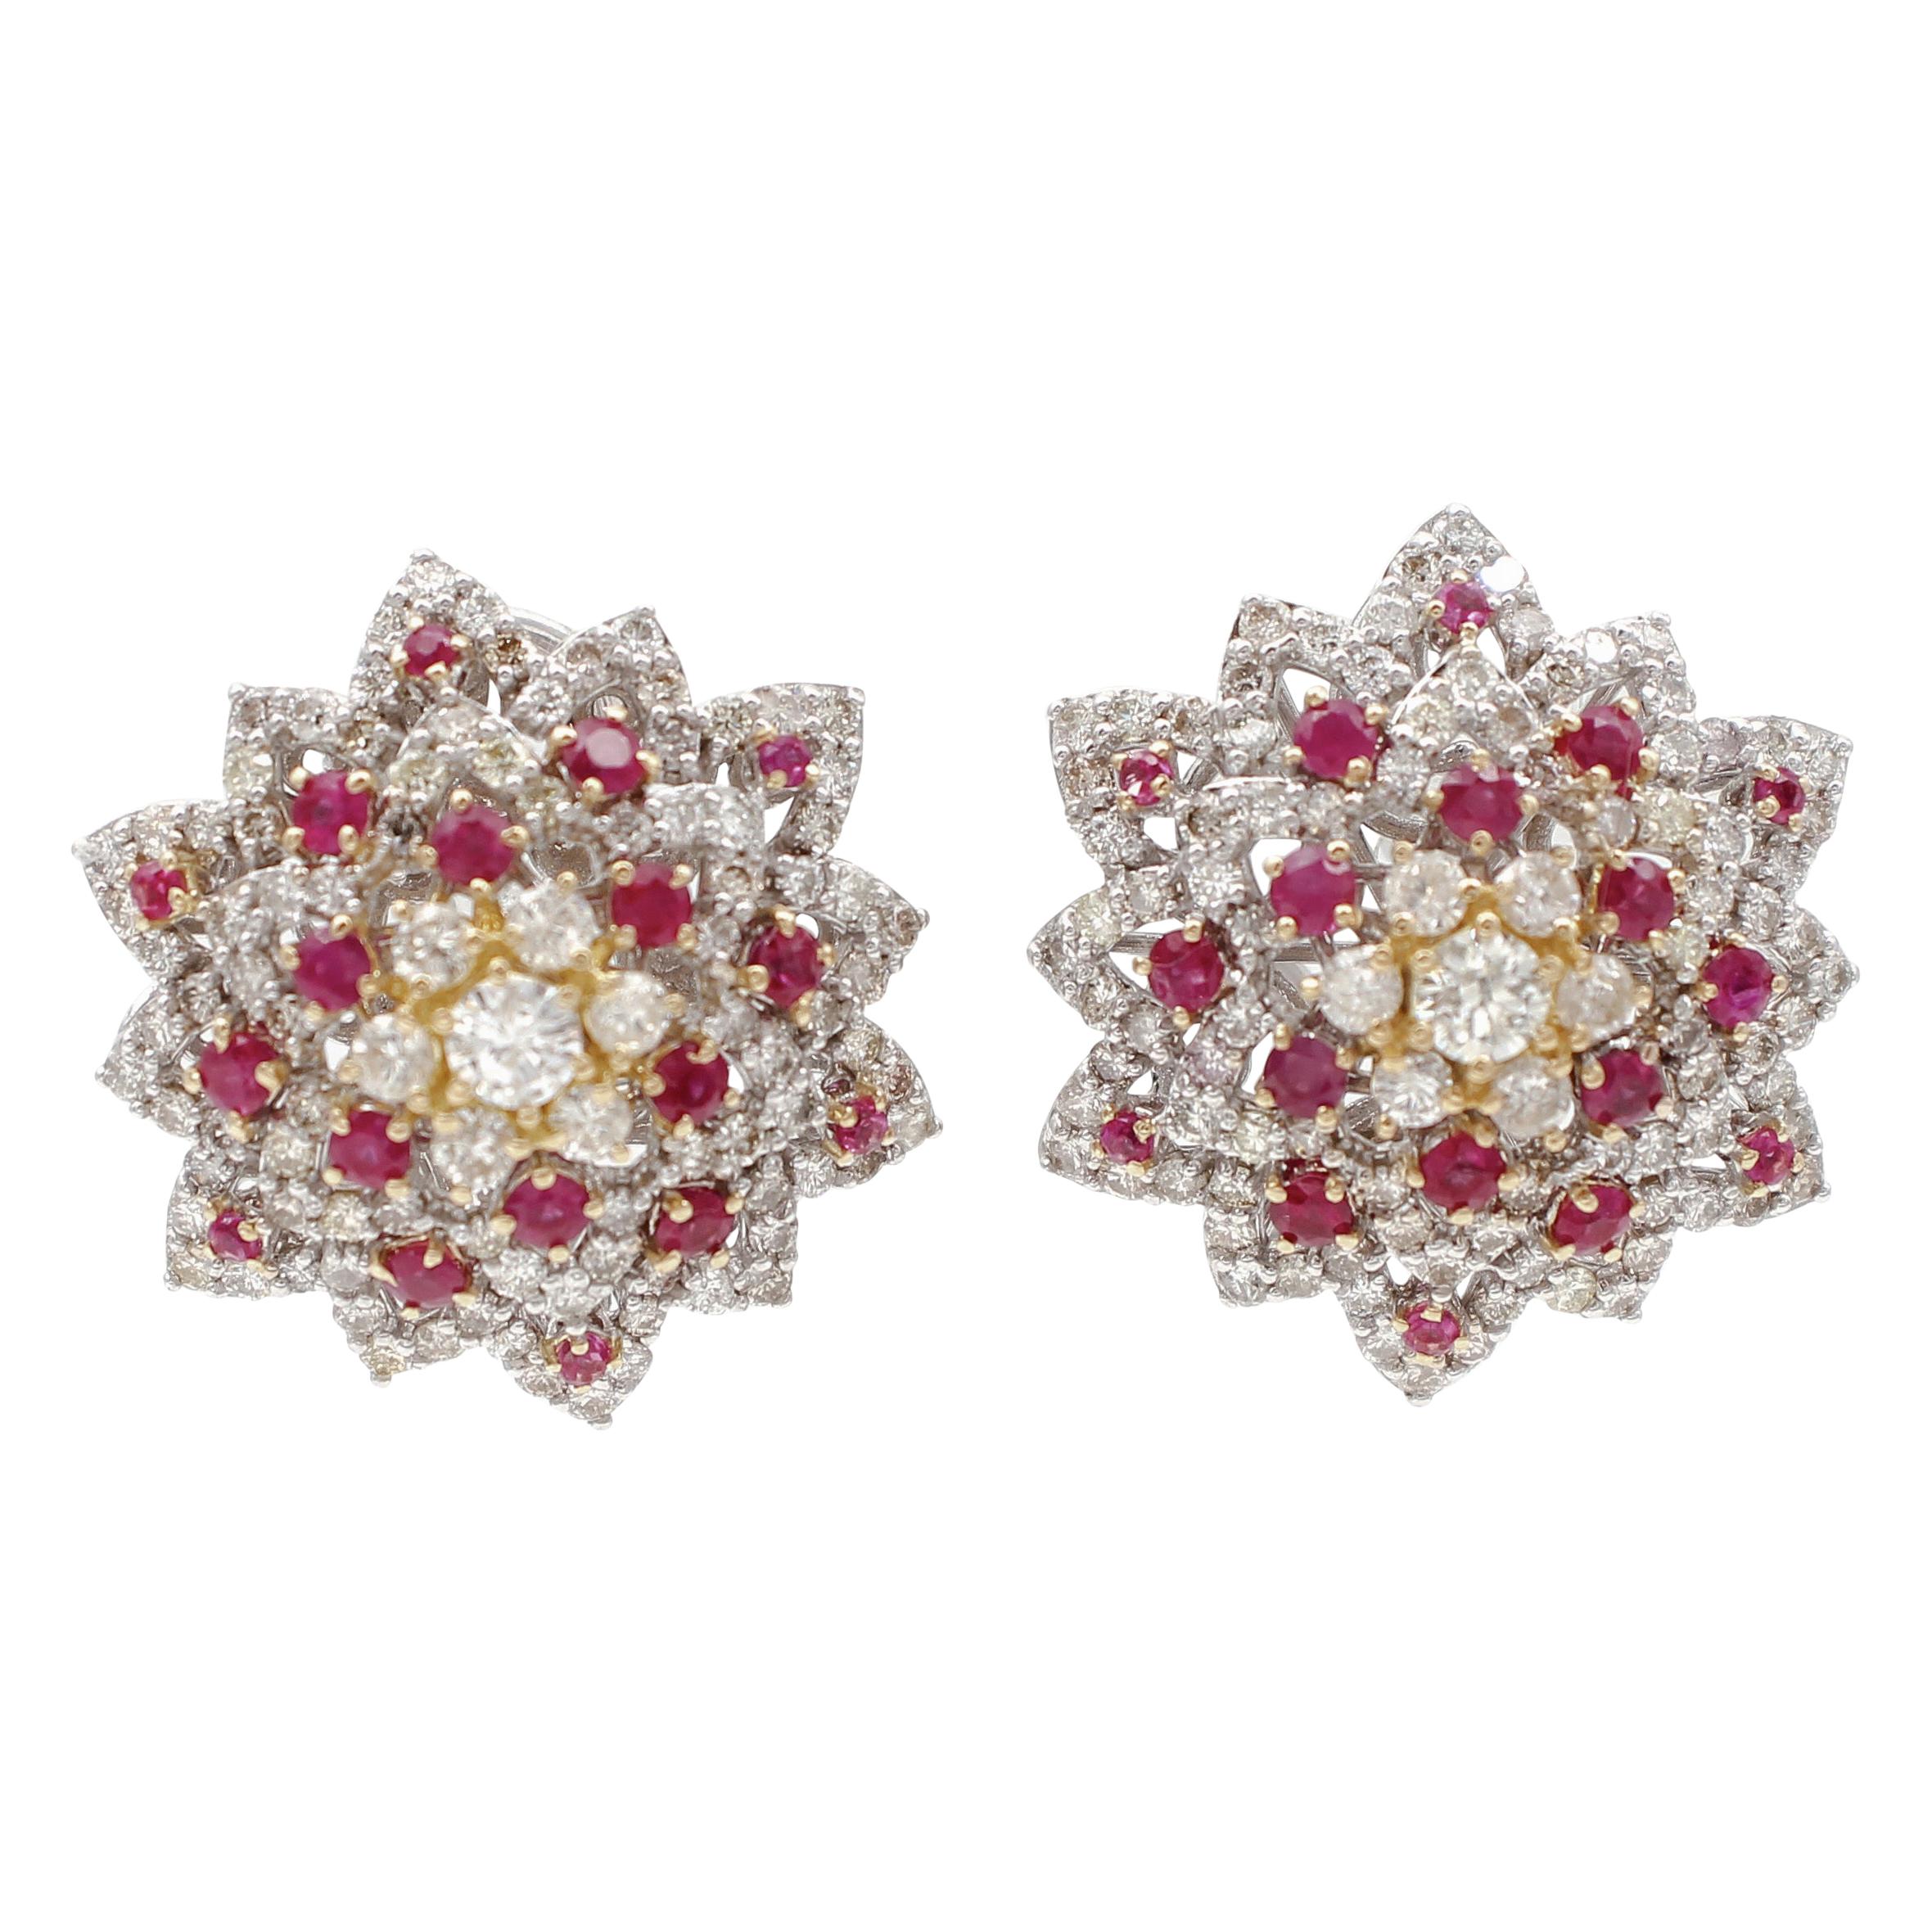 Diamonds and Rubies, 18kt White/Yellow Gold Flower/Star Design Clip-On Earrings